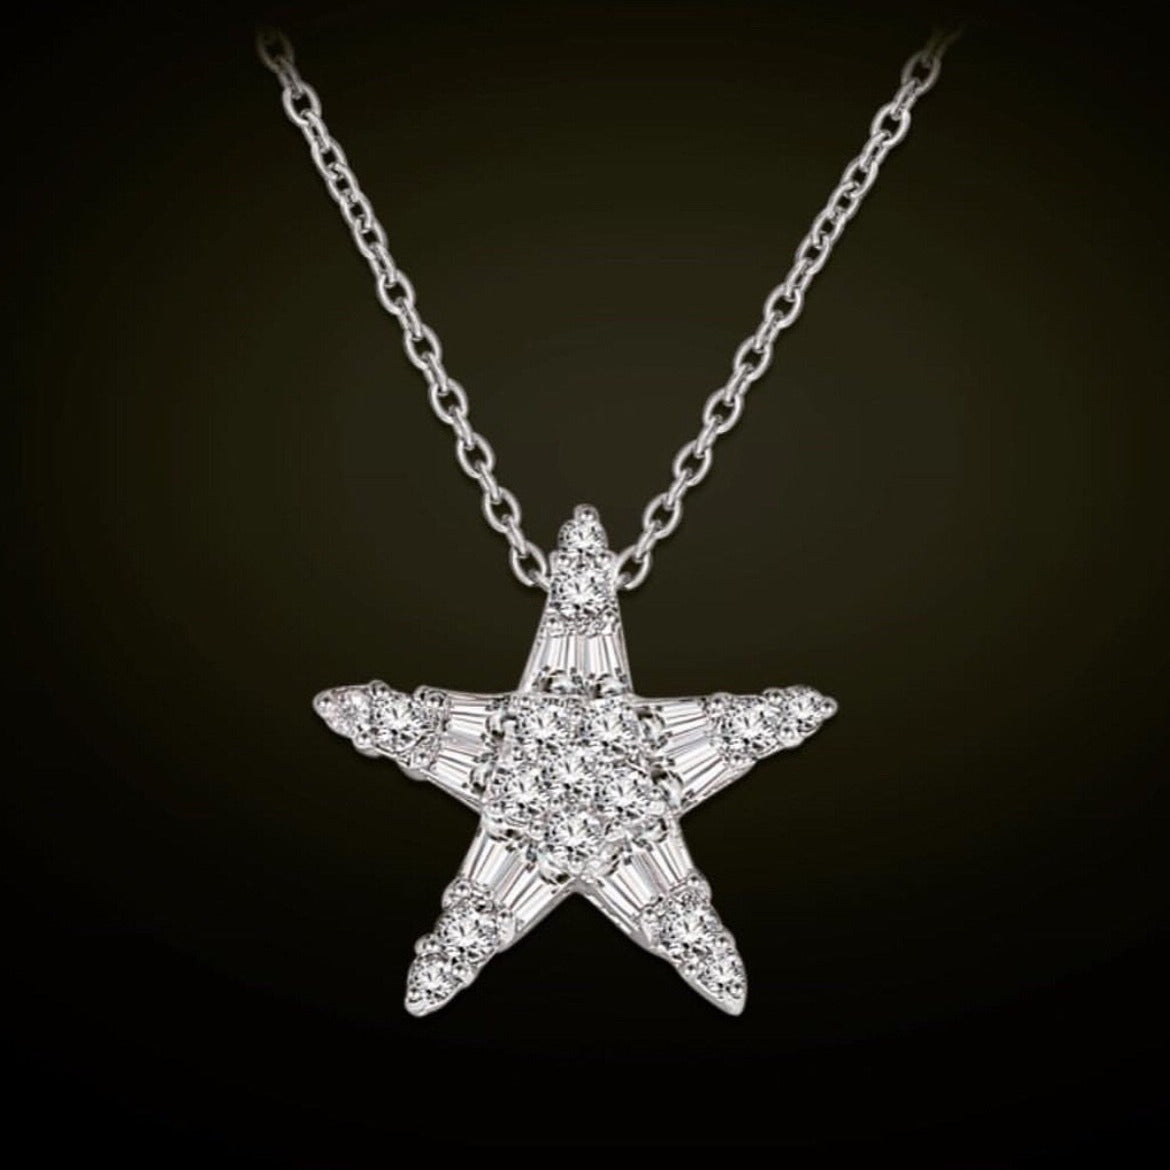 Fine Star Pendant Necklace - Silver